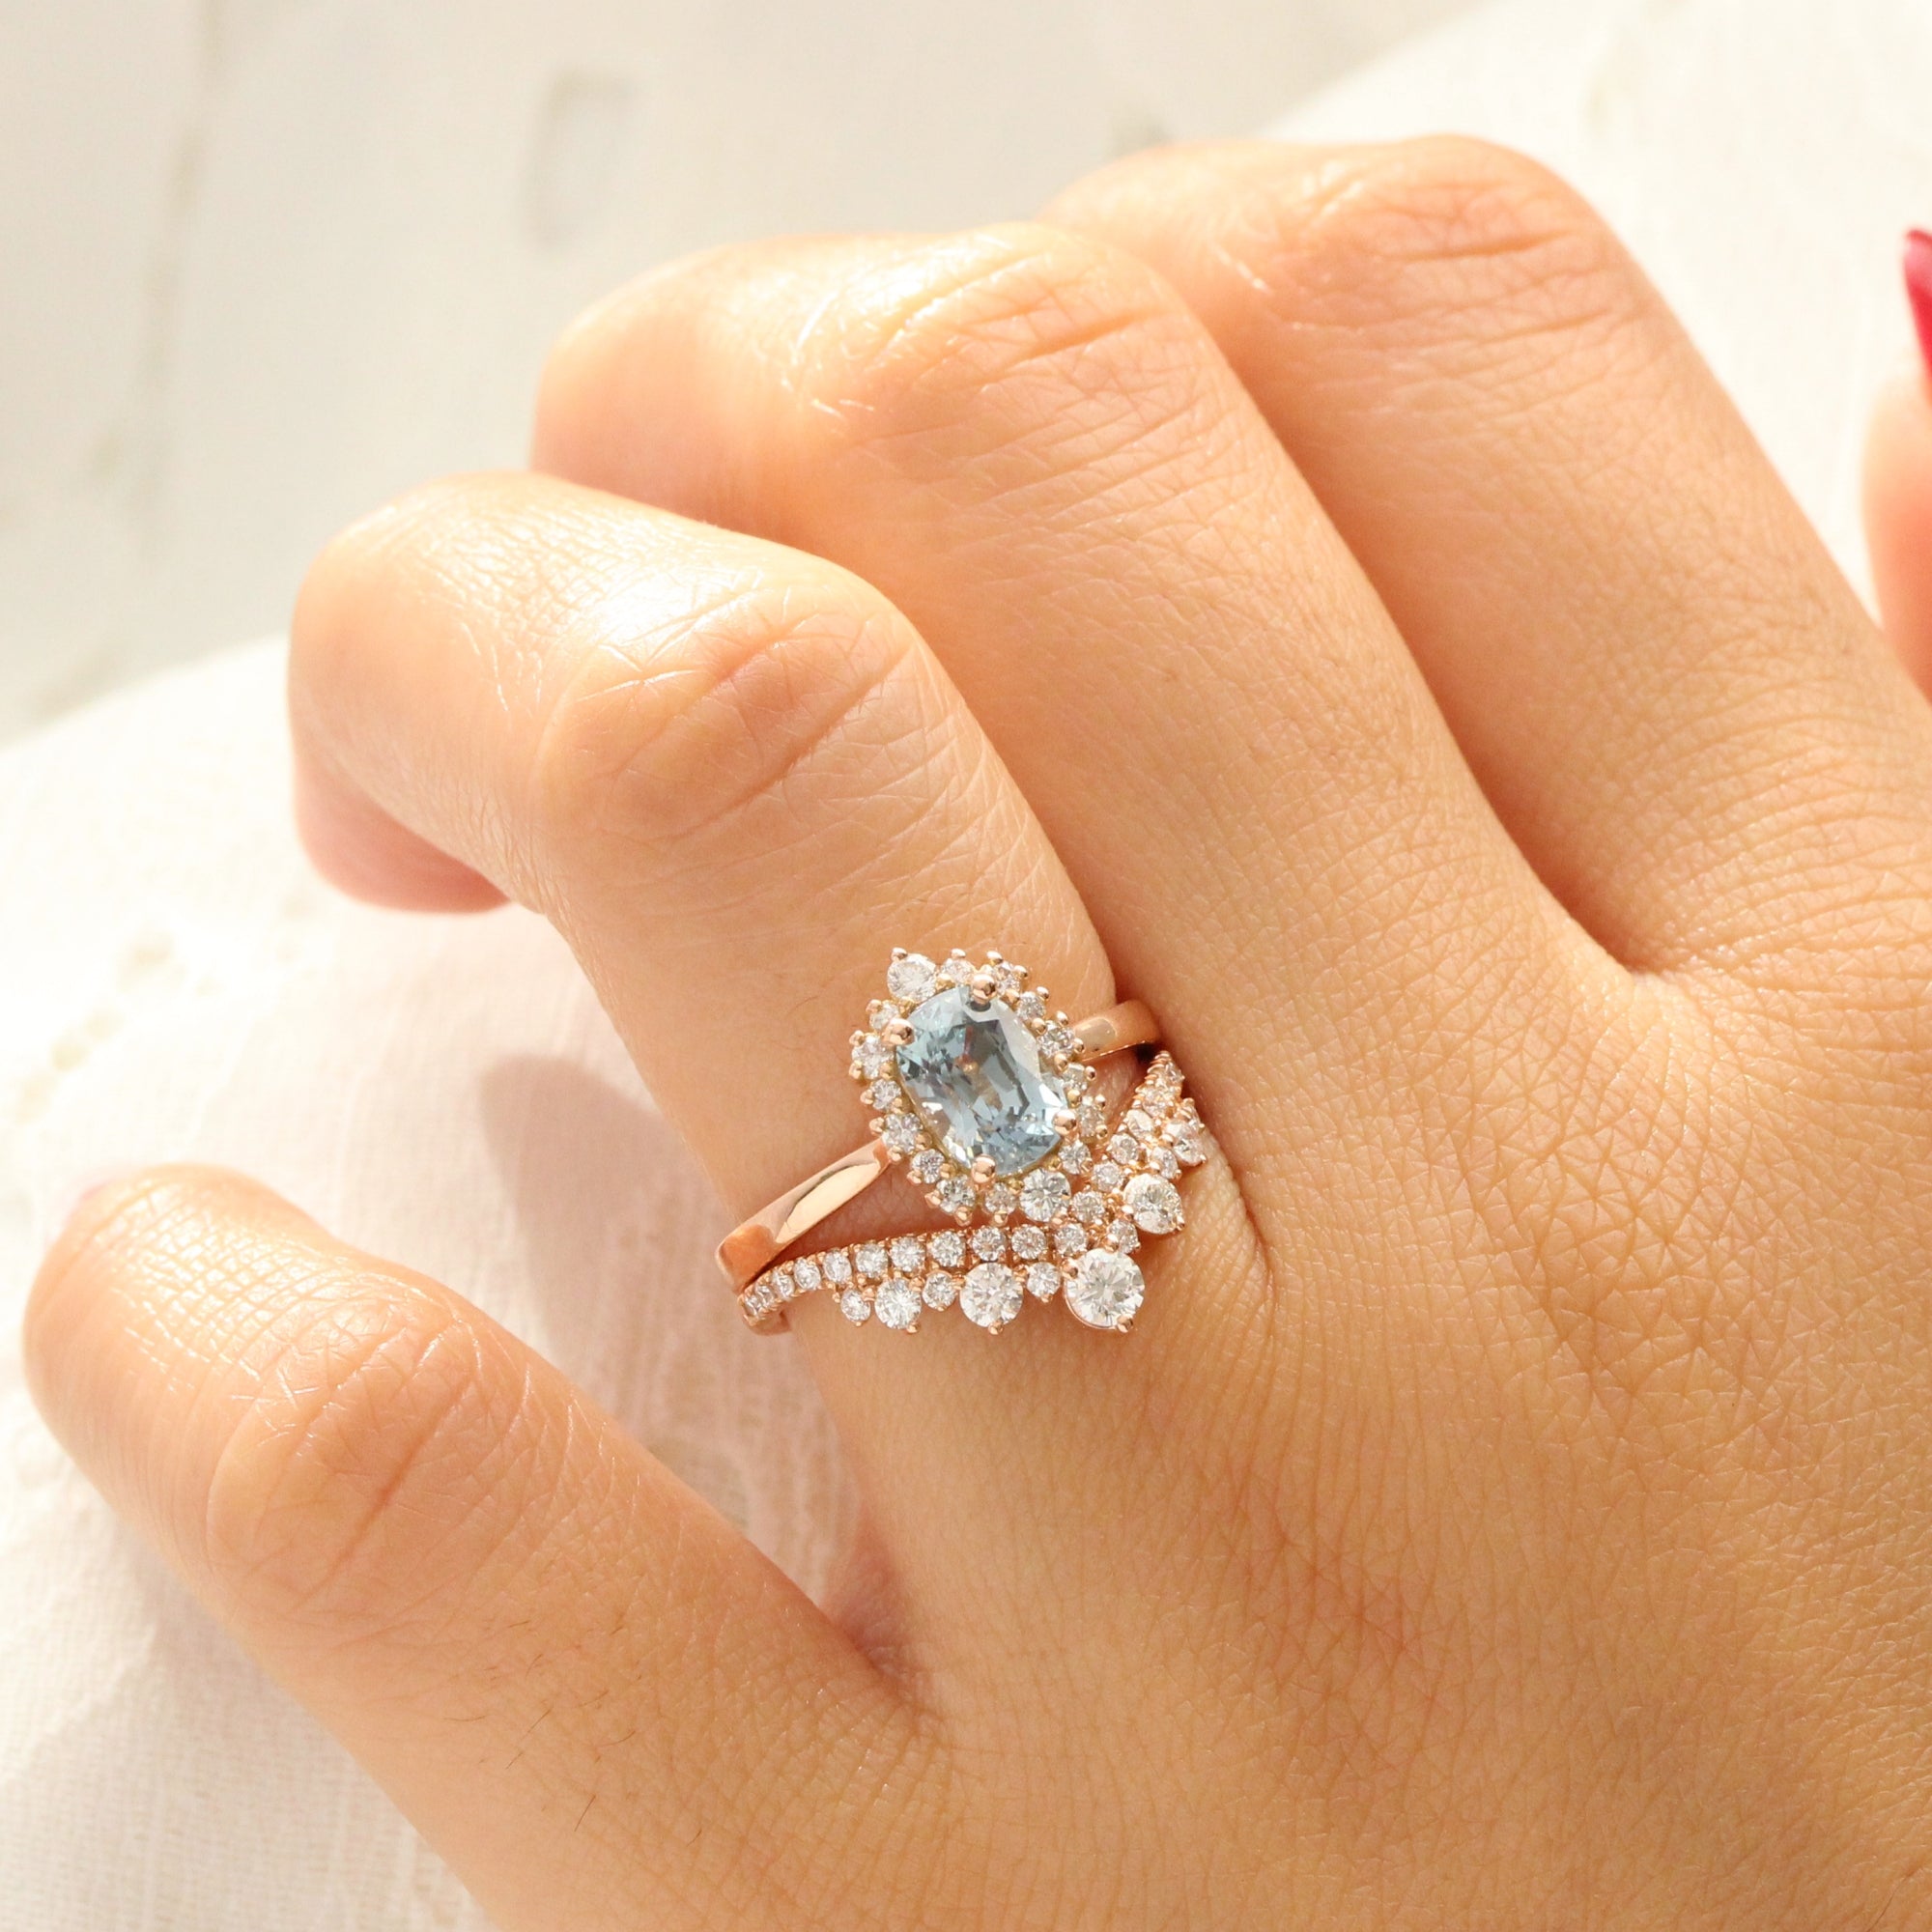 1.81 Ct Teal Aqua Blue Sapphire Ring in 14k Rose Gold Tiara Halo Diamond, Size 6.5